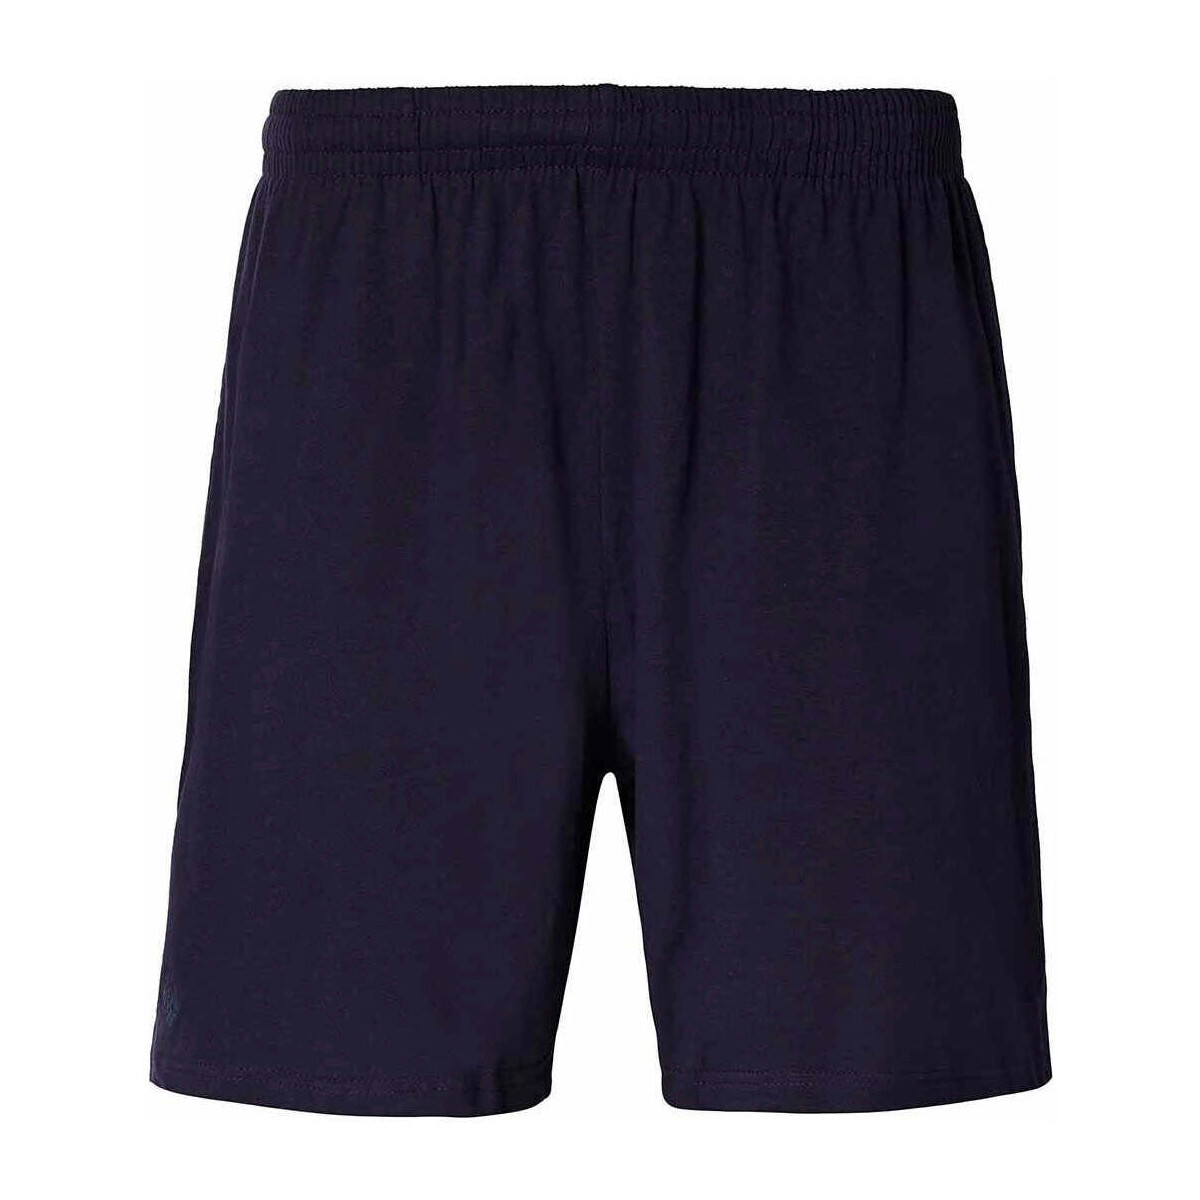 Vêtements Garçon Shorts / Bermudas Kappa Short Cabas Bleu